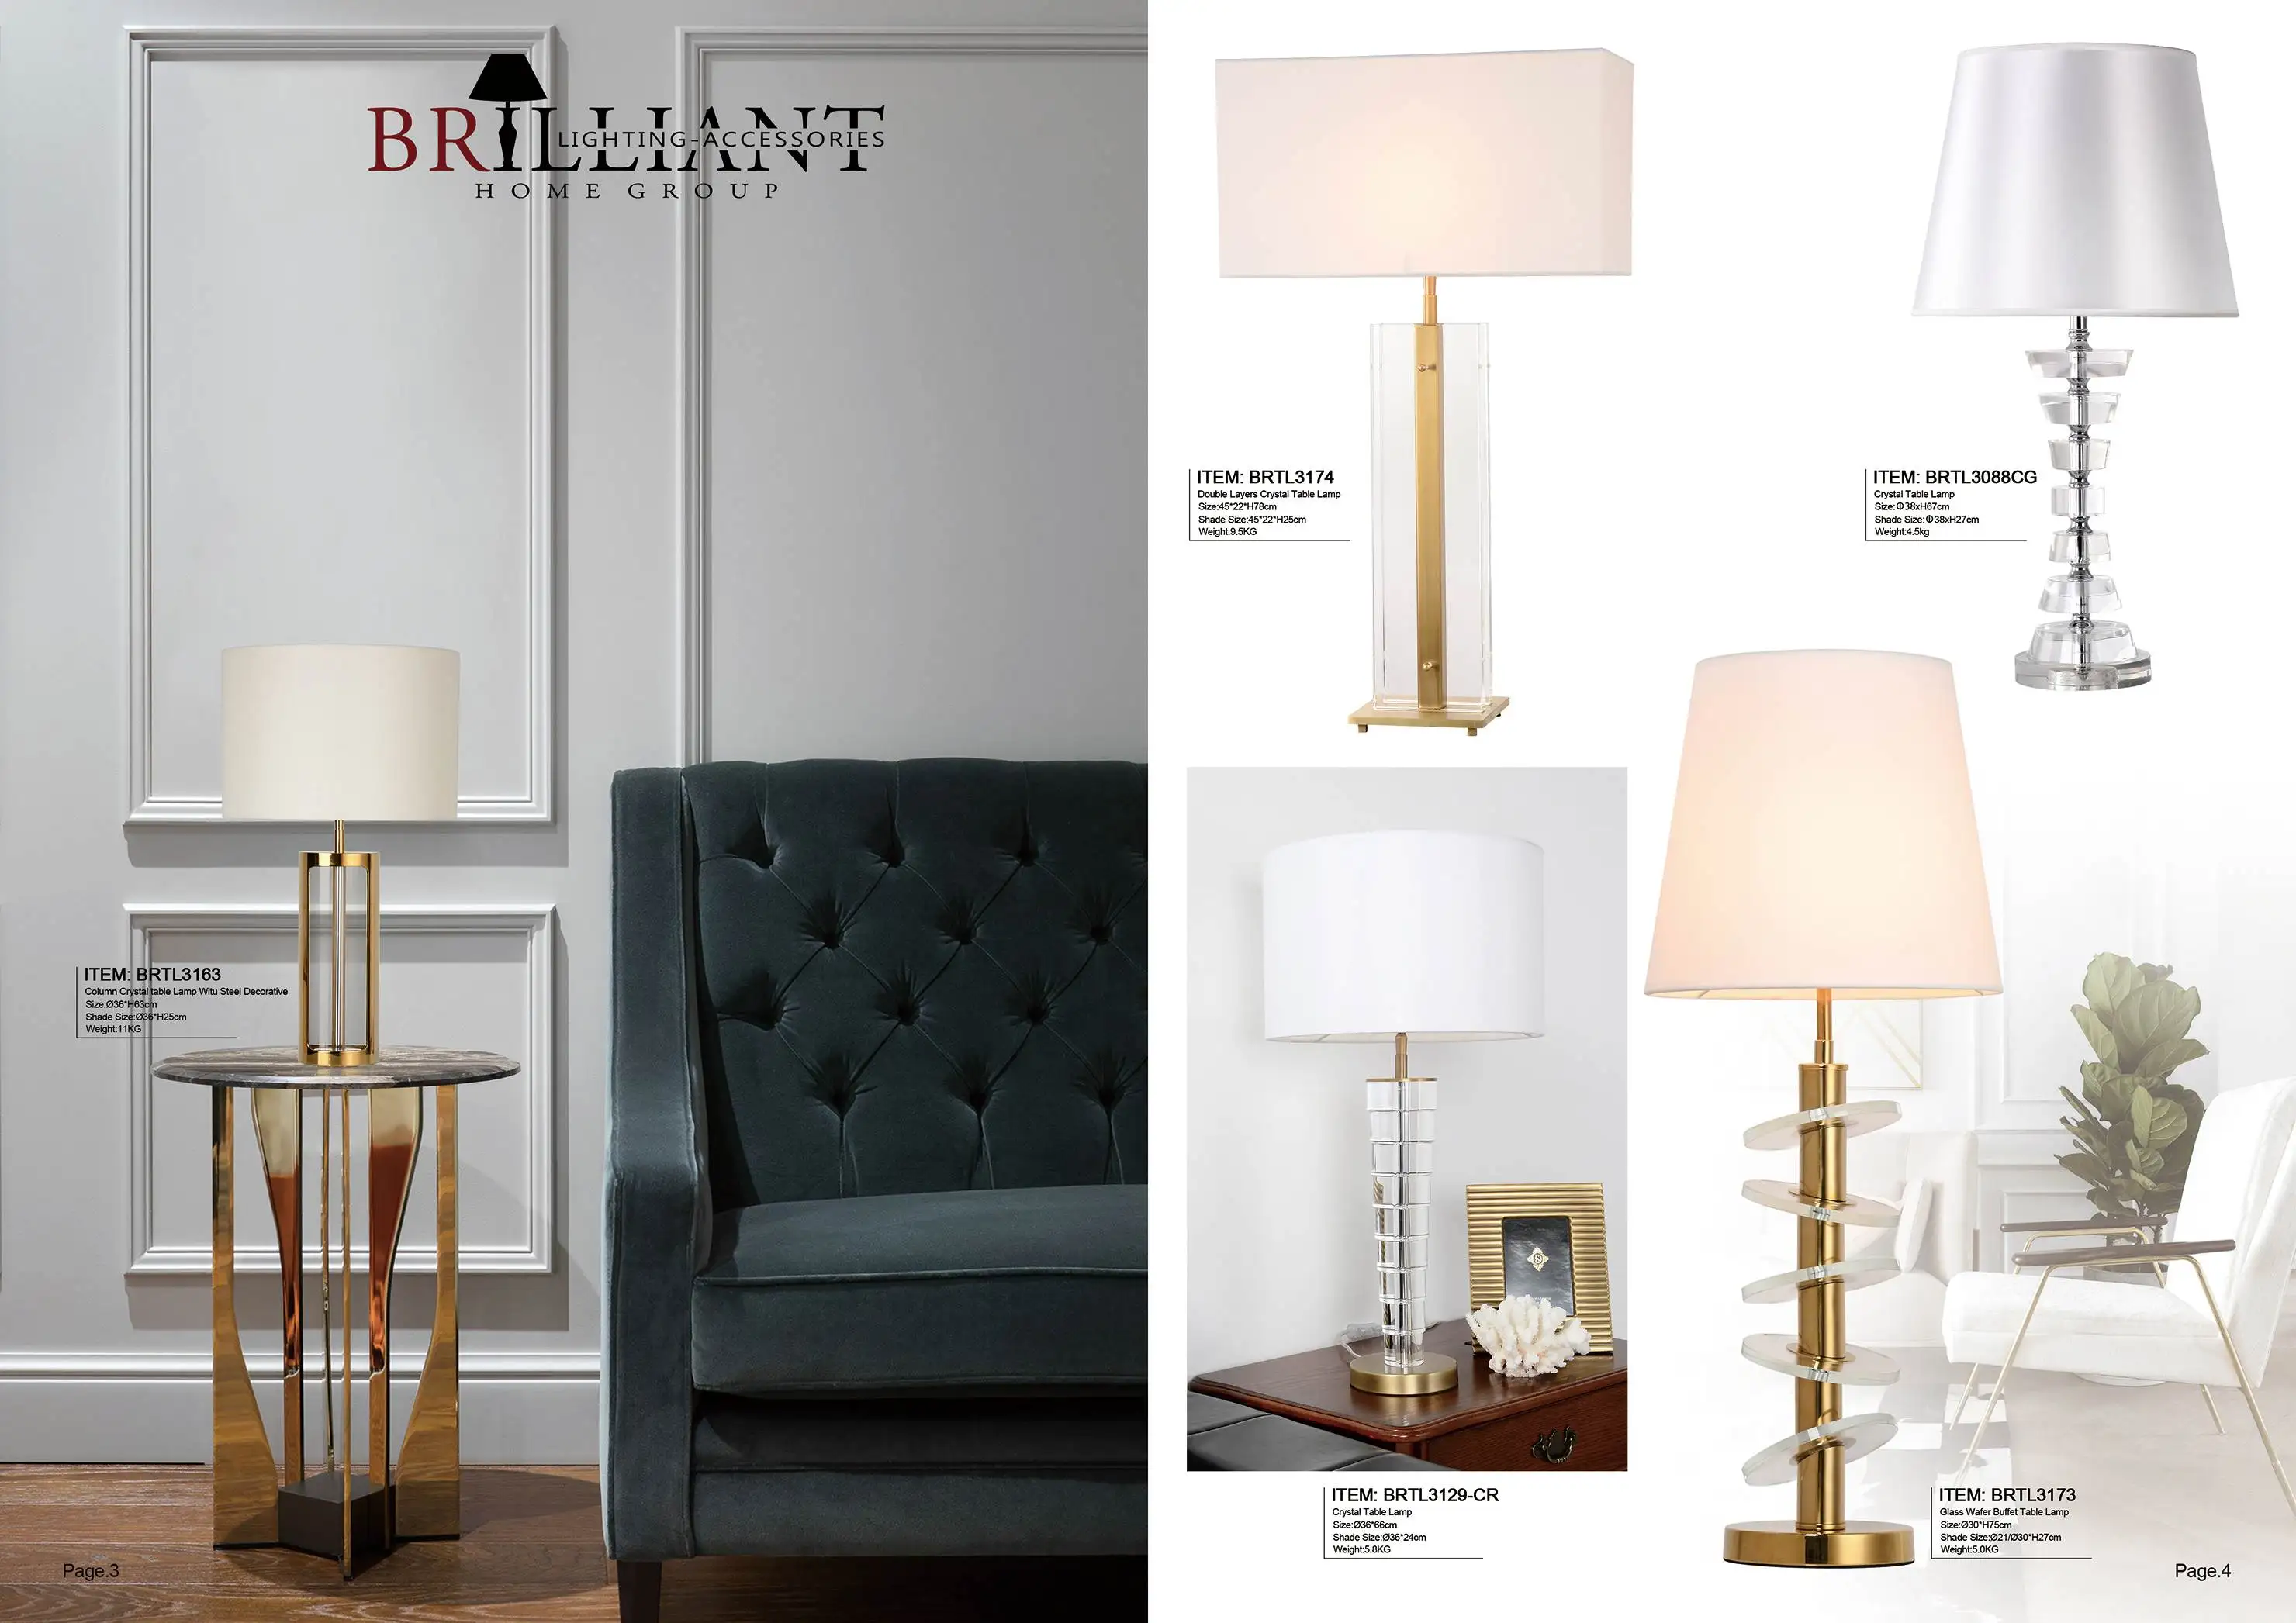 Modern Design K9 Crystal Golden Metal Glass Wafer Buffet Table Lamps For Interior Lighting